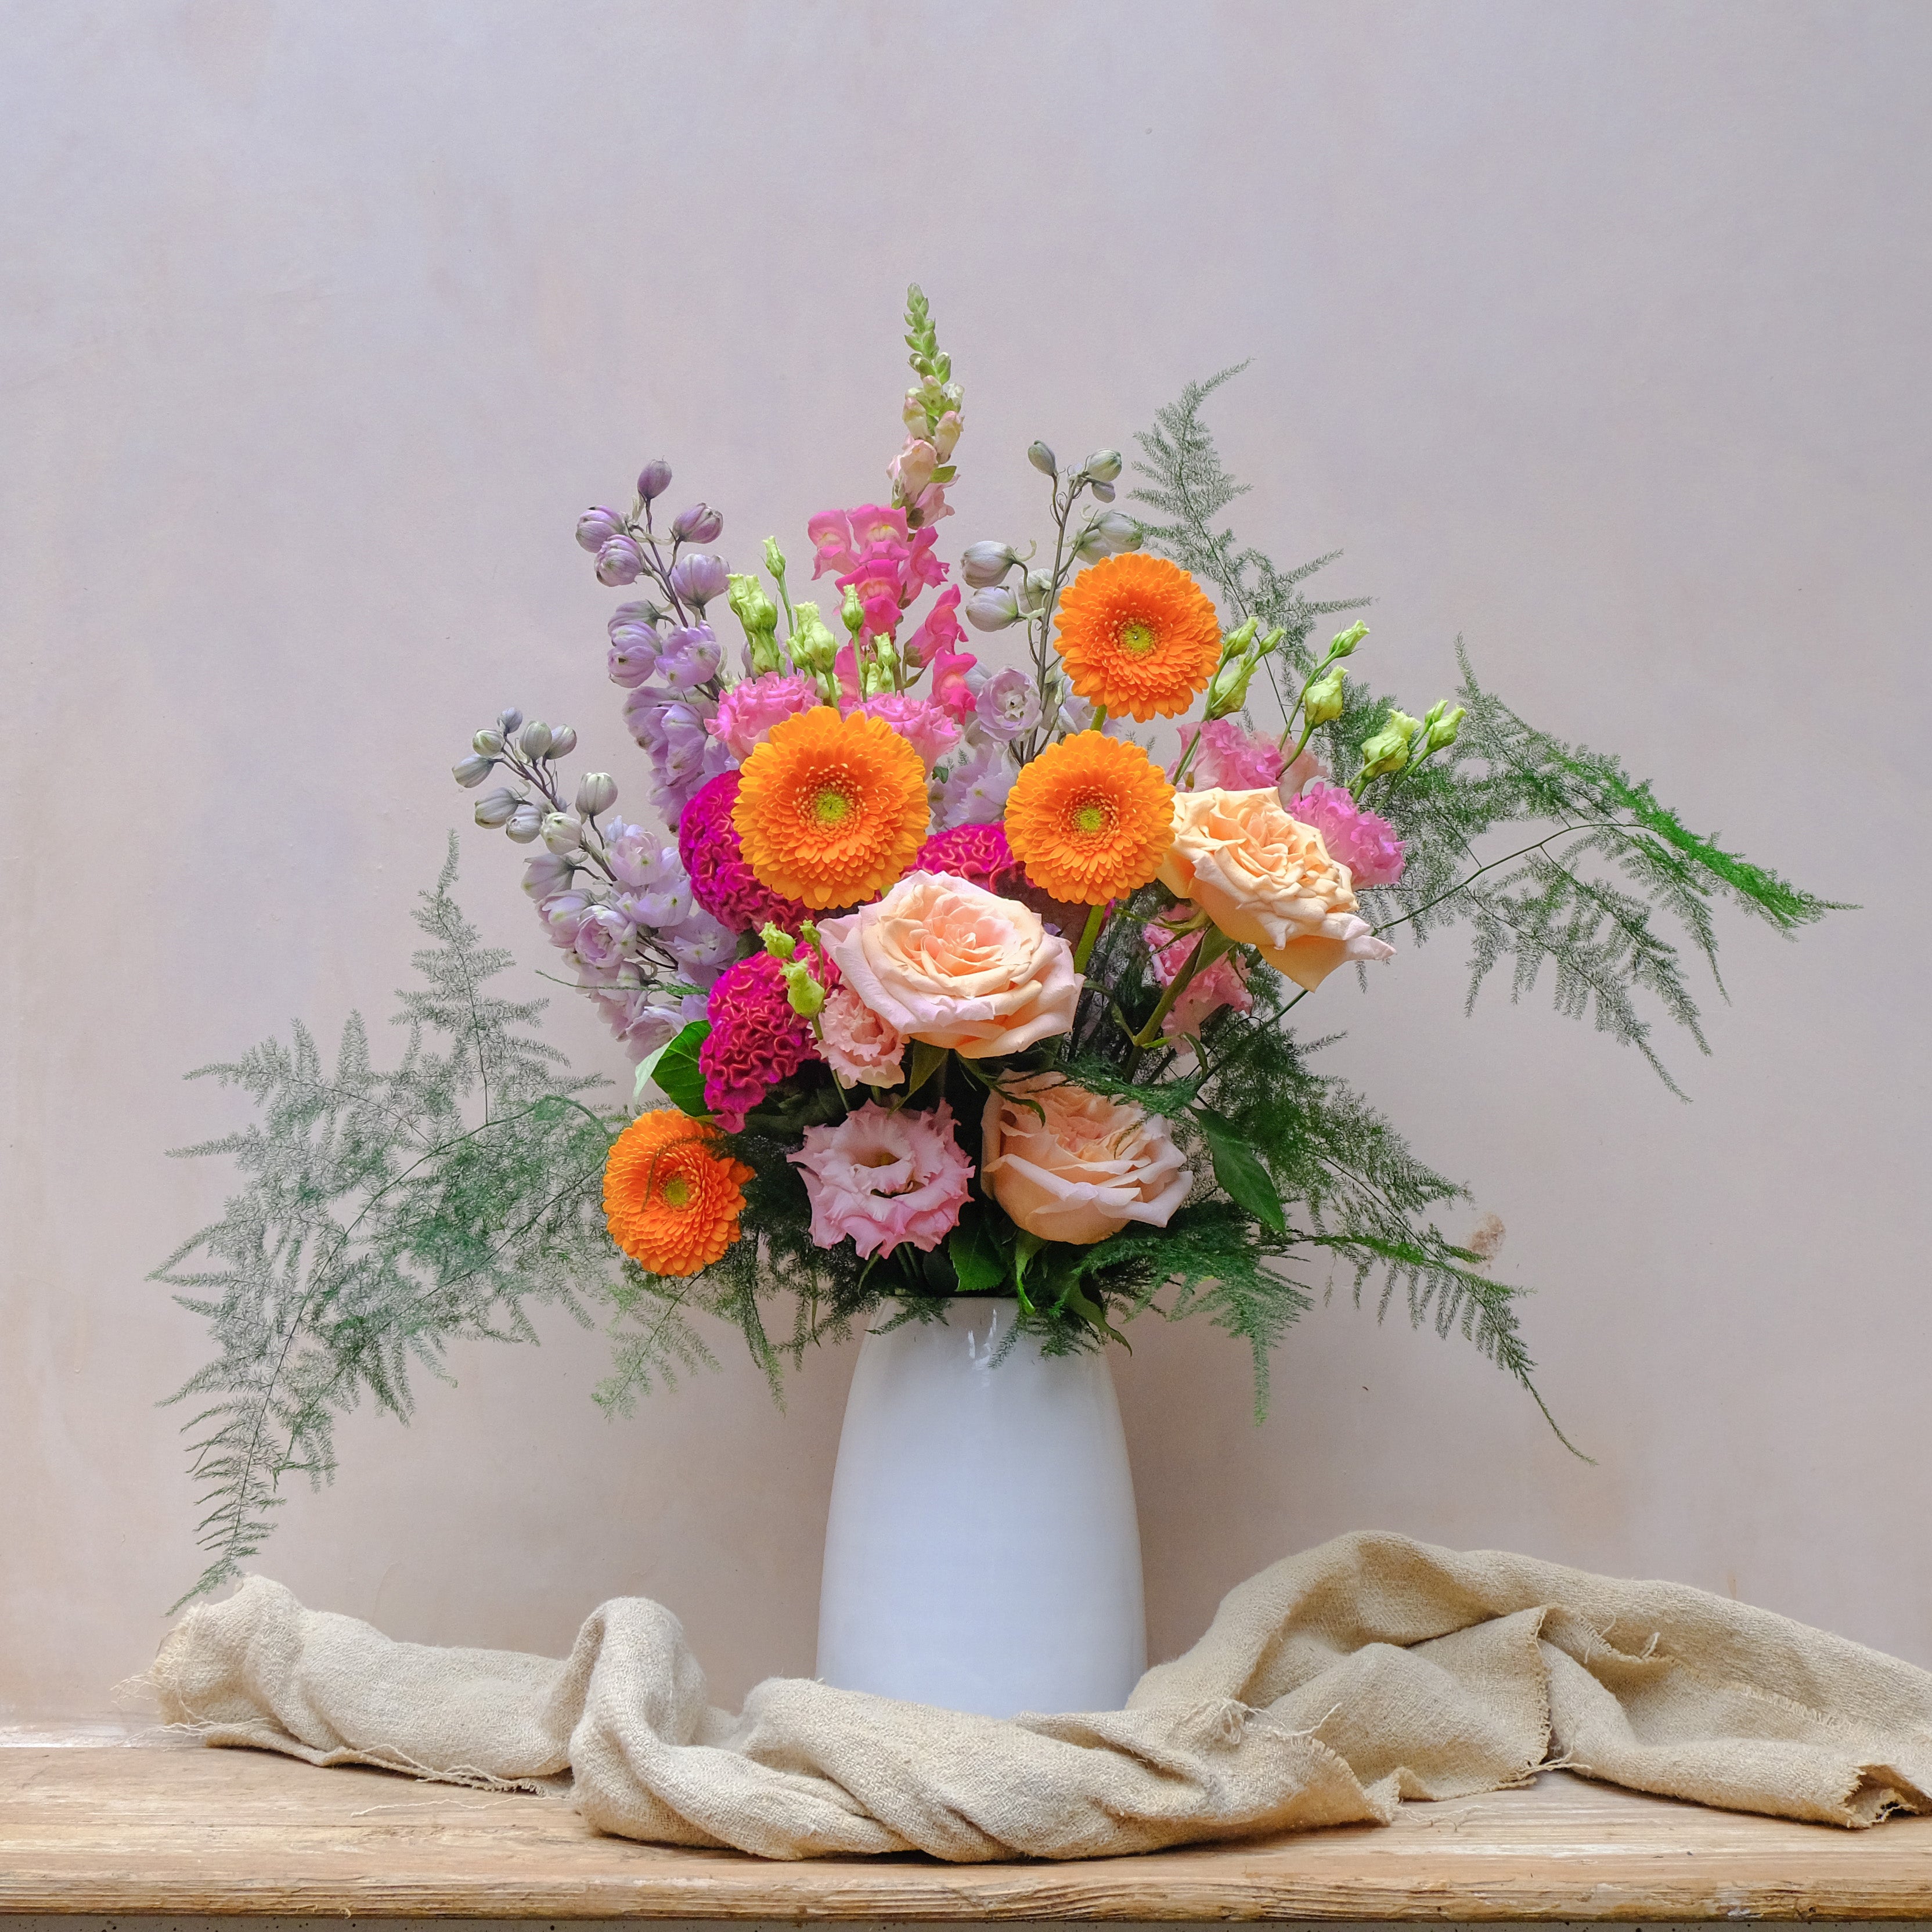 colourful fresh flowers bouquet in white ceramic vase